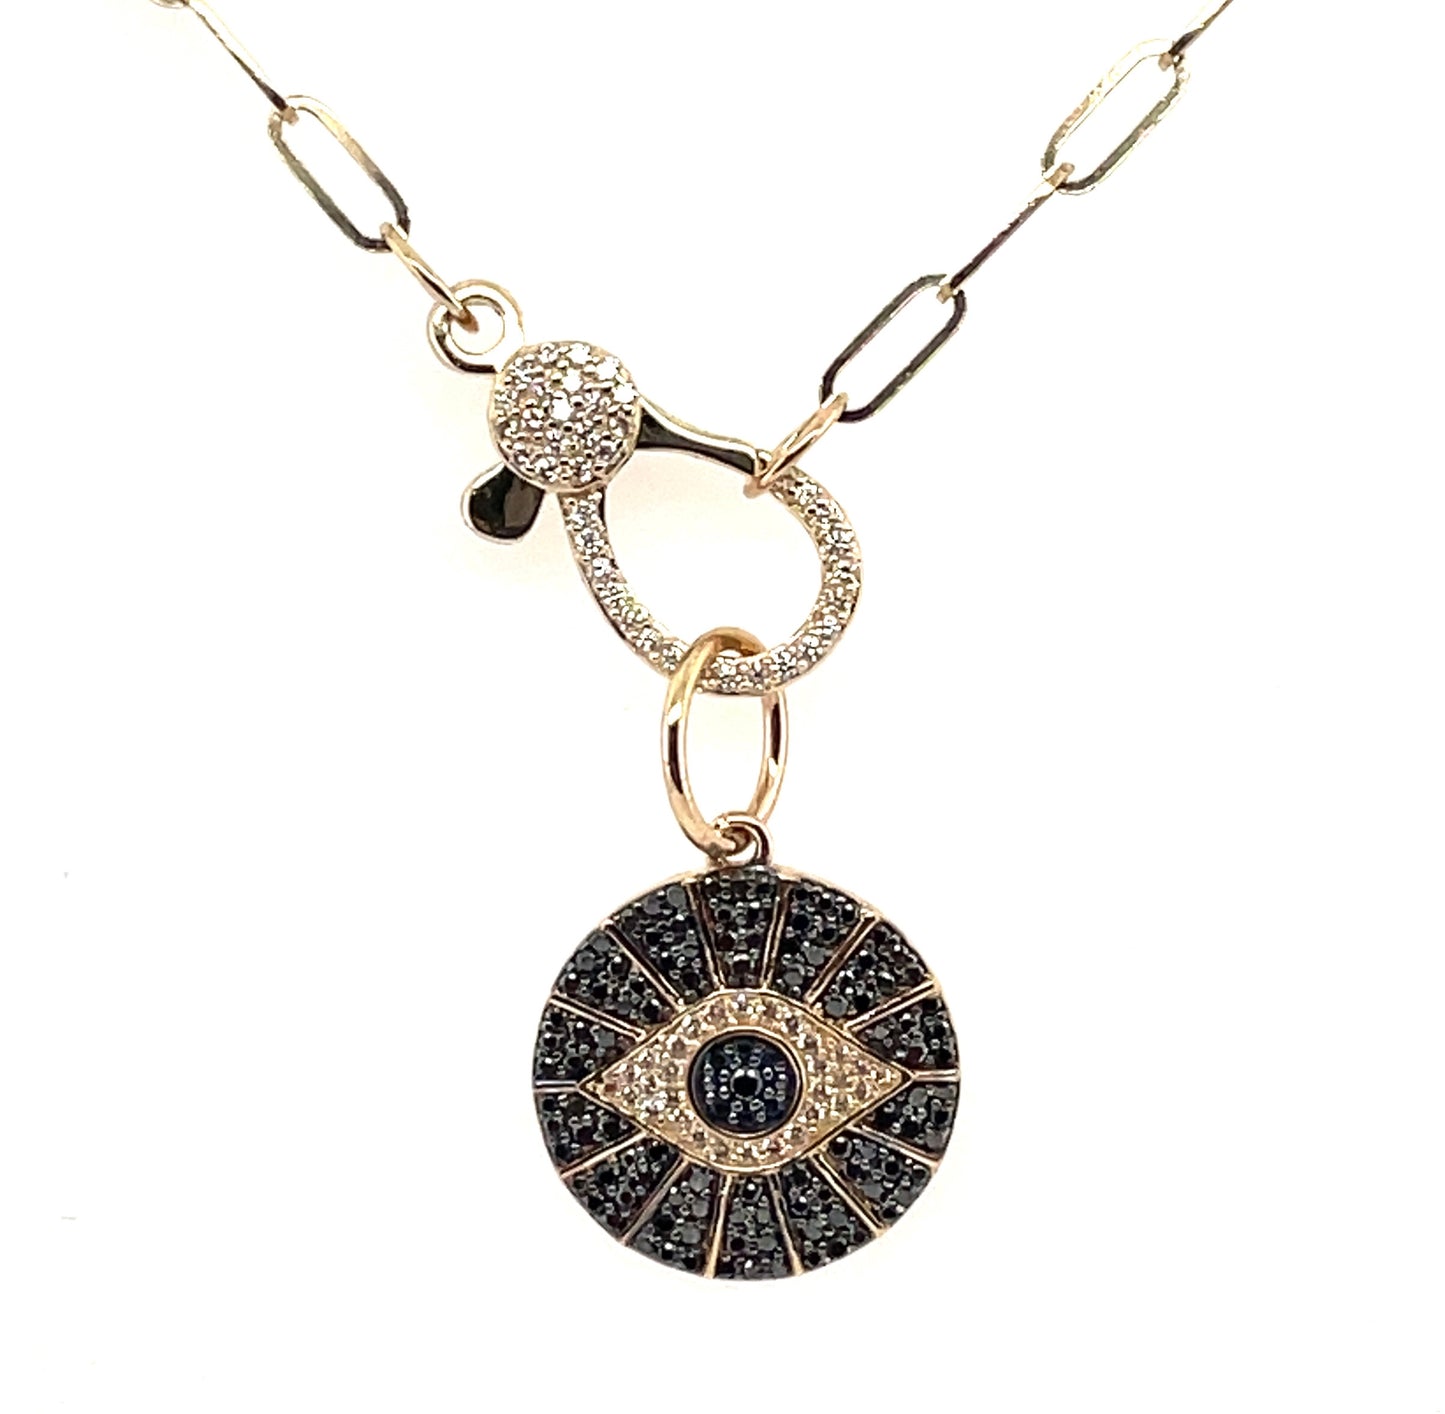 Black diamond evil eye pendant. A beautiful symbol for protection. 